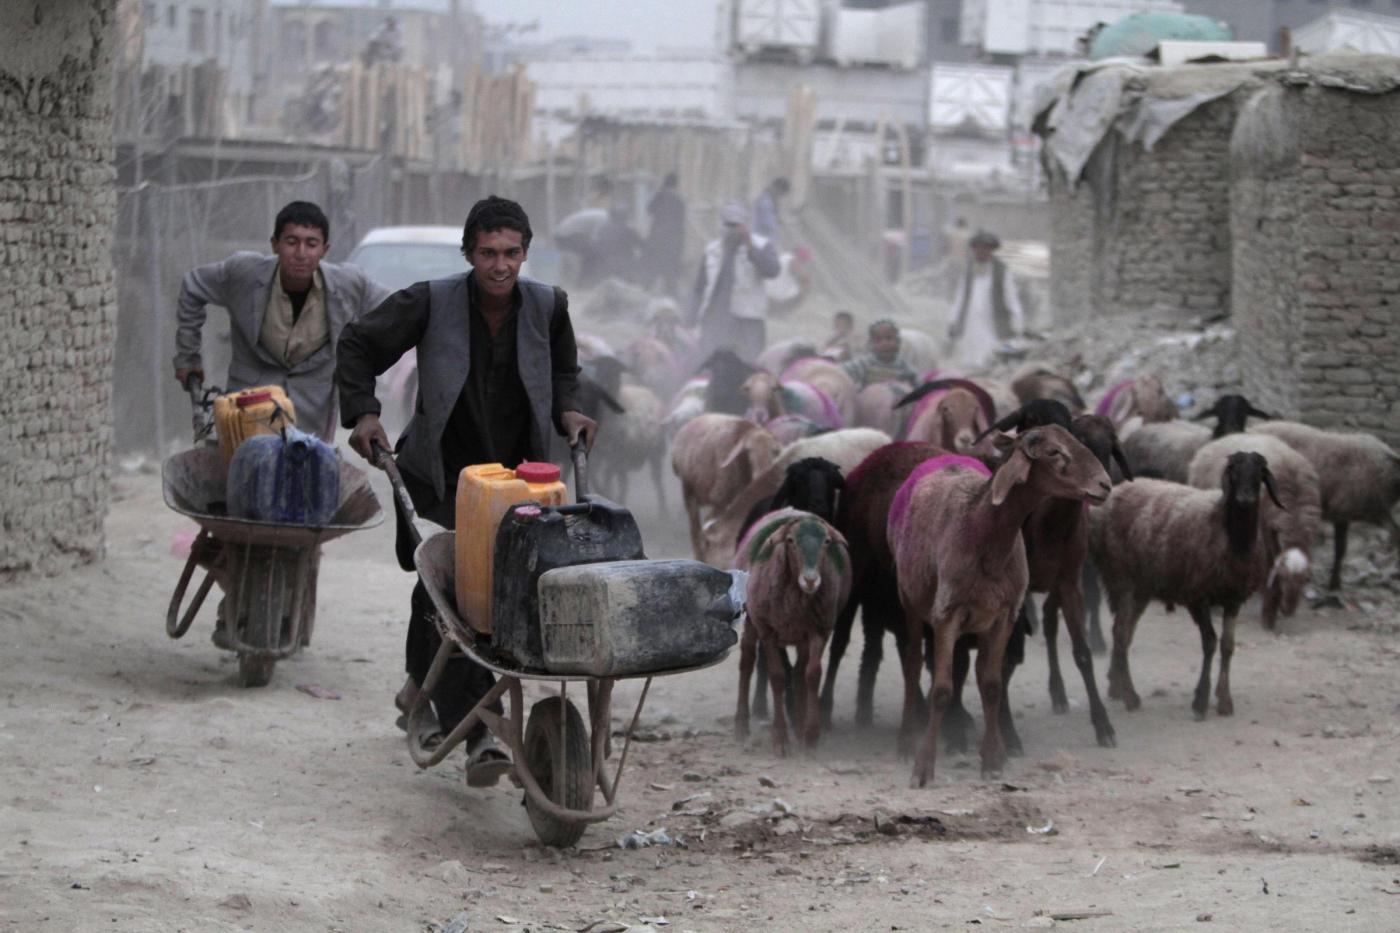 Momenti di vita quotidiana in Afghanistan